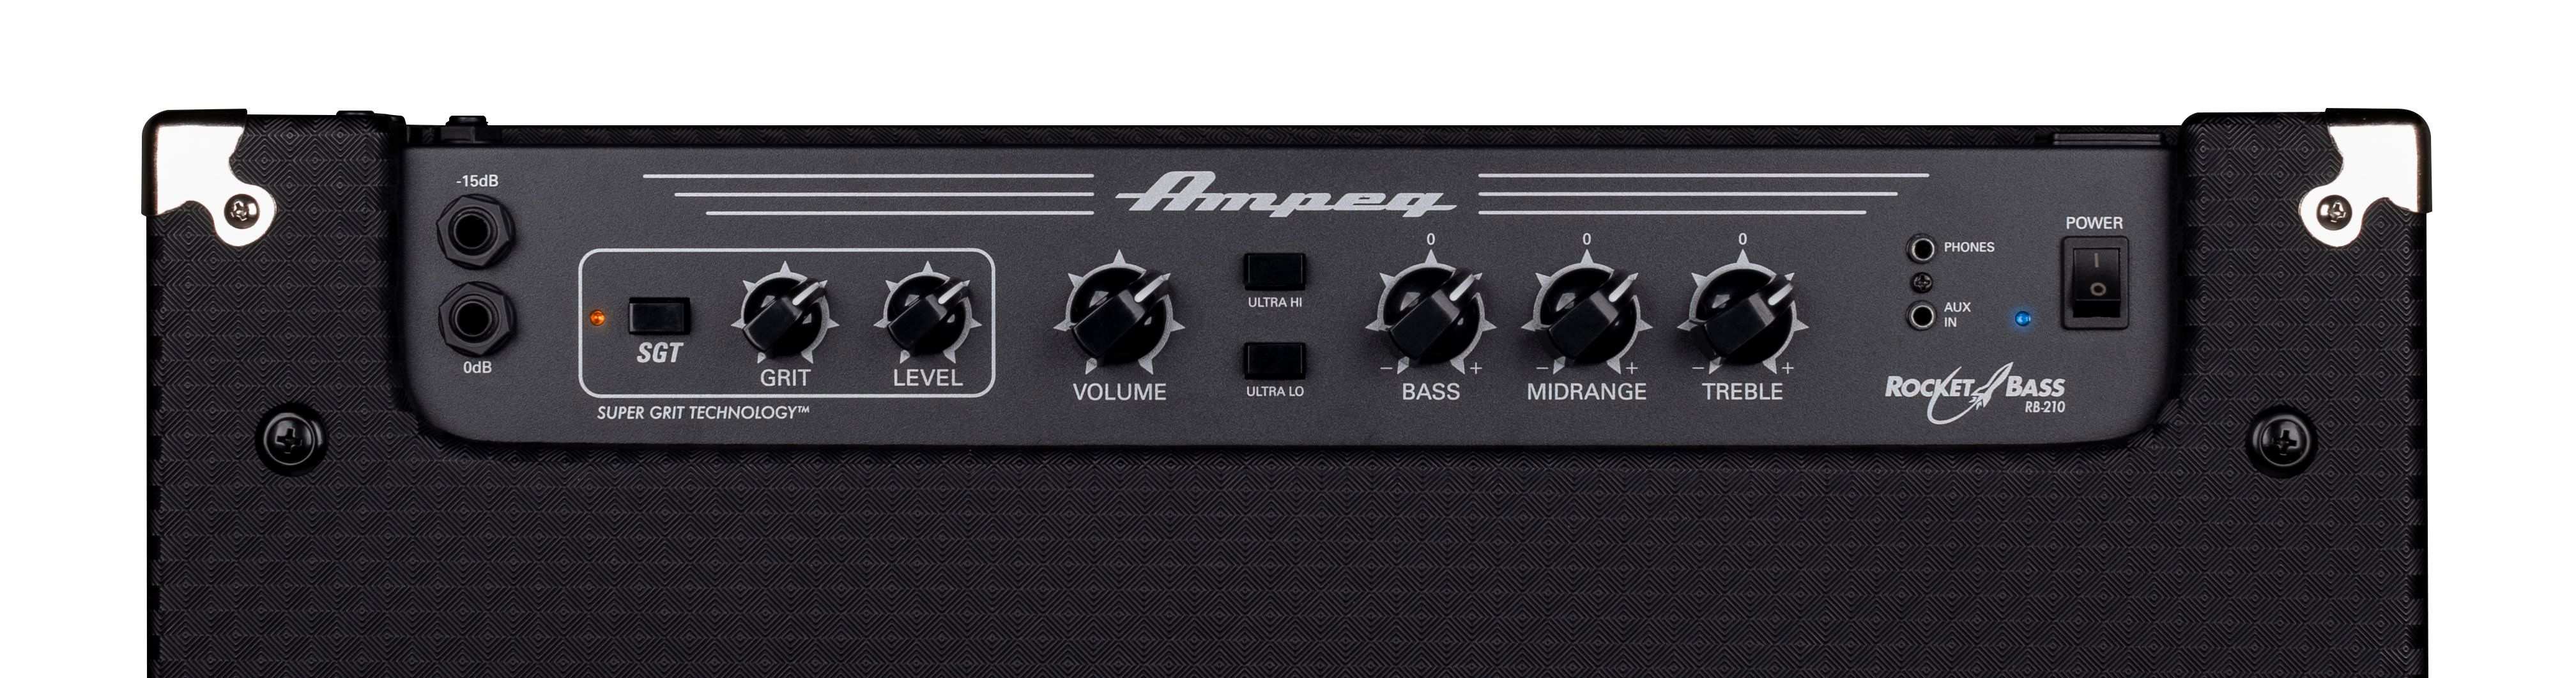 Ampeg Rocket Bass Combo 500w 2x10 - Combo amplificador para bajo - Variation 2